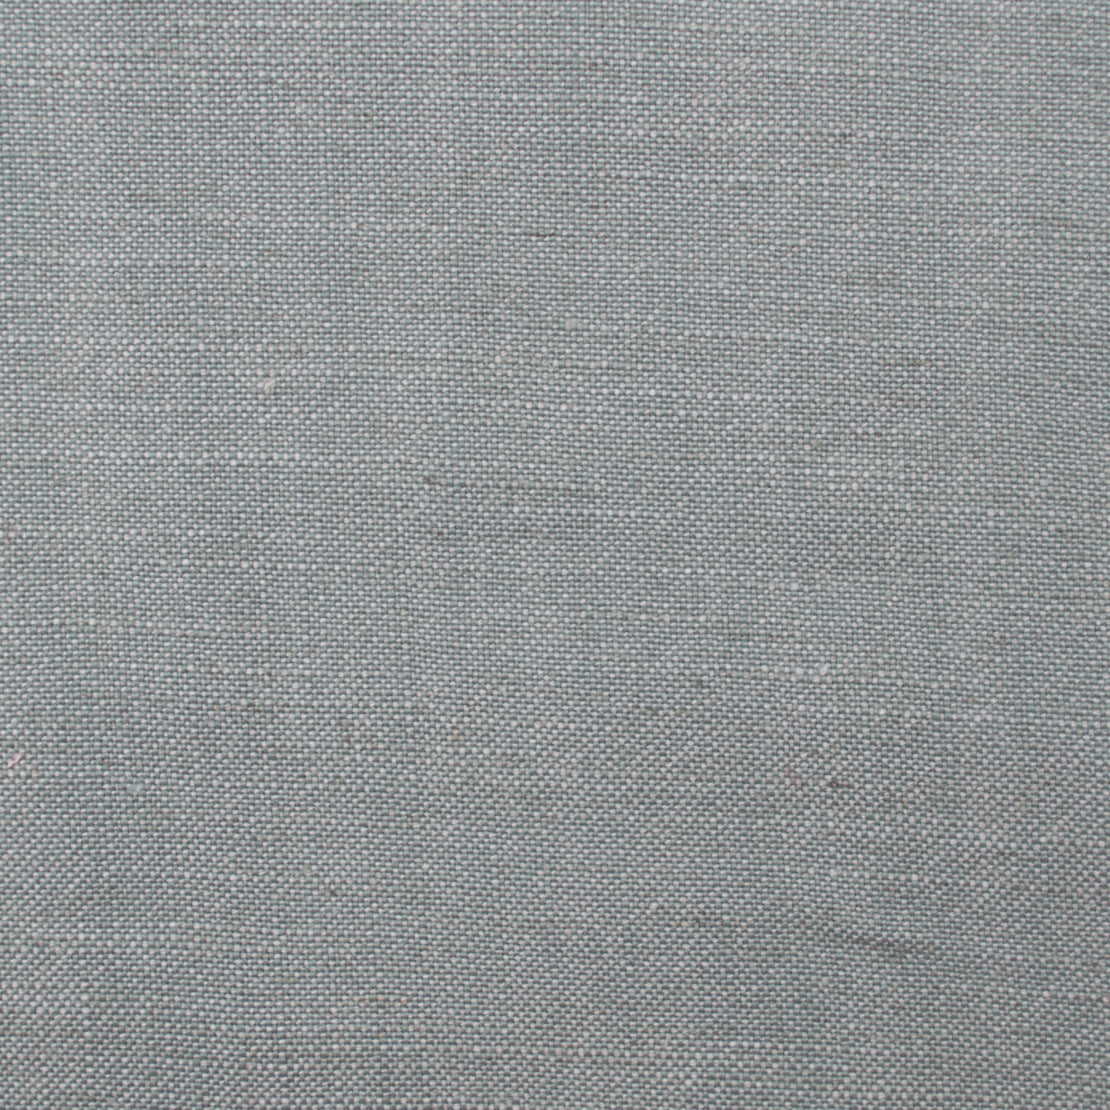 Purchase Mag FabricPattern number 11235 pattern name Hampton Gravel